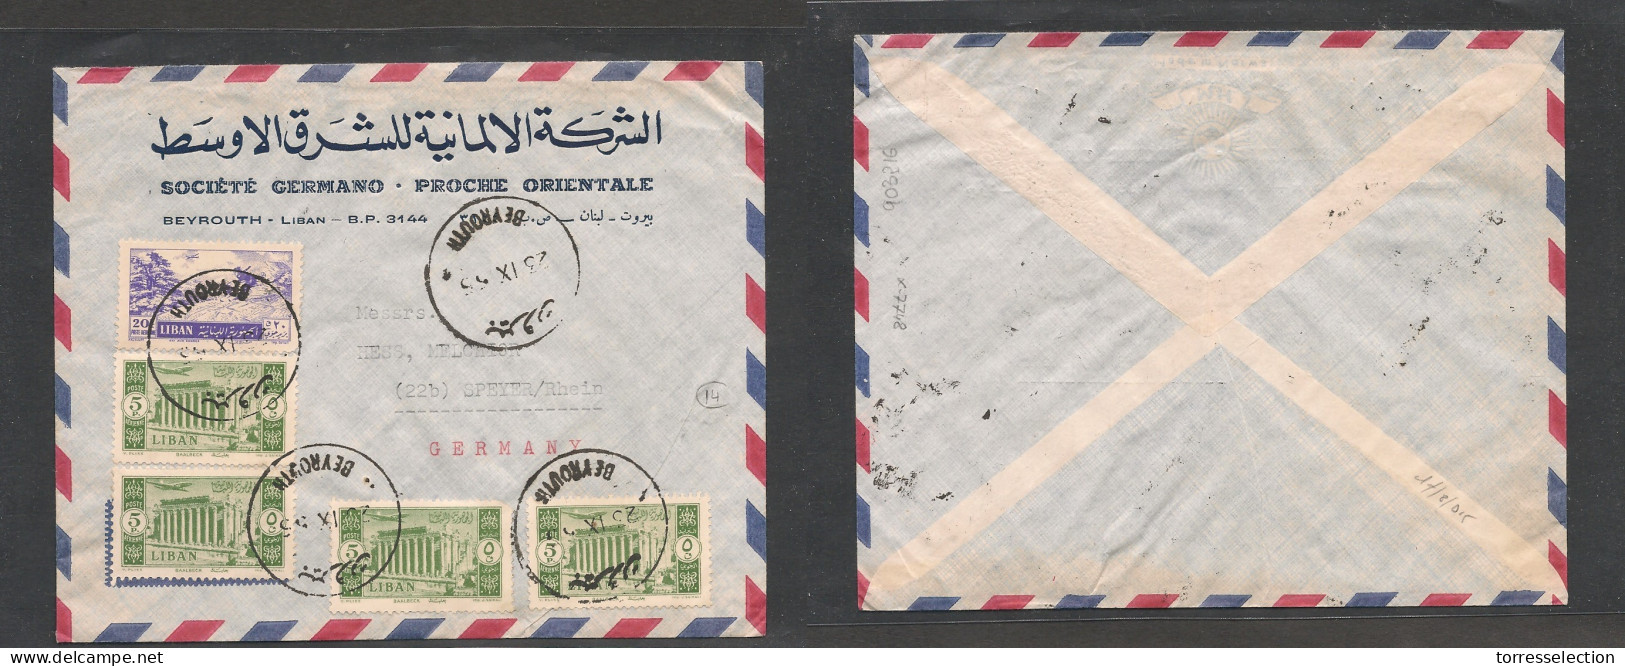 LEBANON. Lebanon Cover - 1955 Beyrouth To Germany Speyer Rhein Air Mult Fkd Env, XF XSALE. - Lebanon